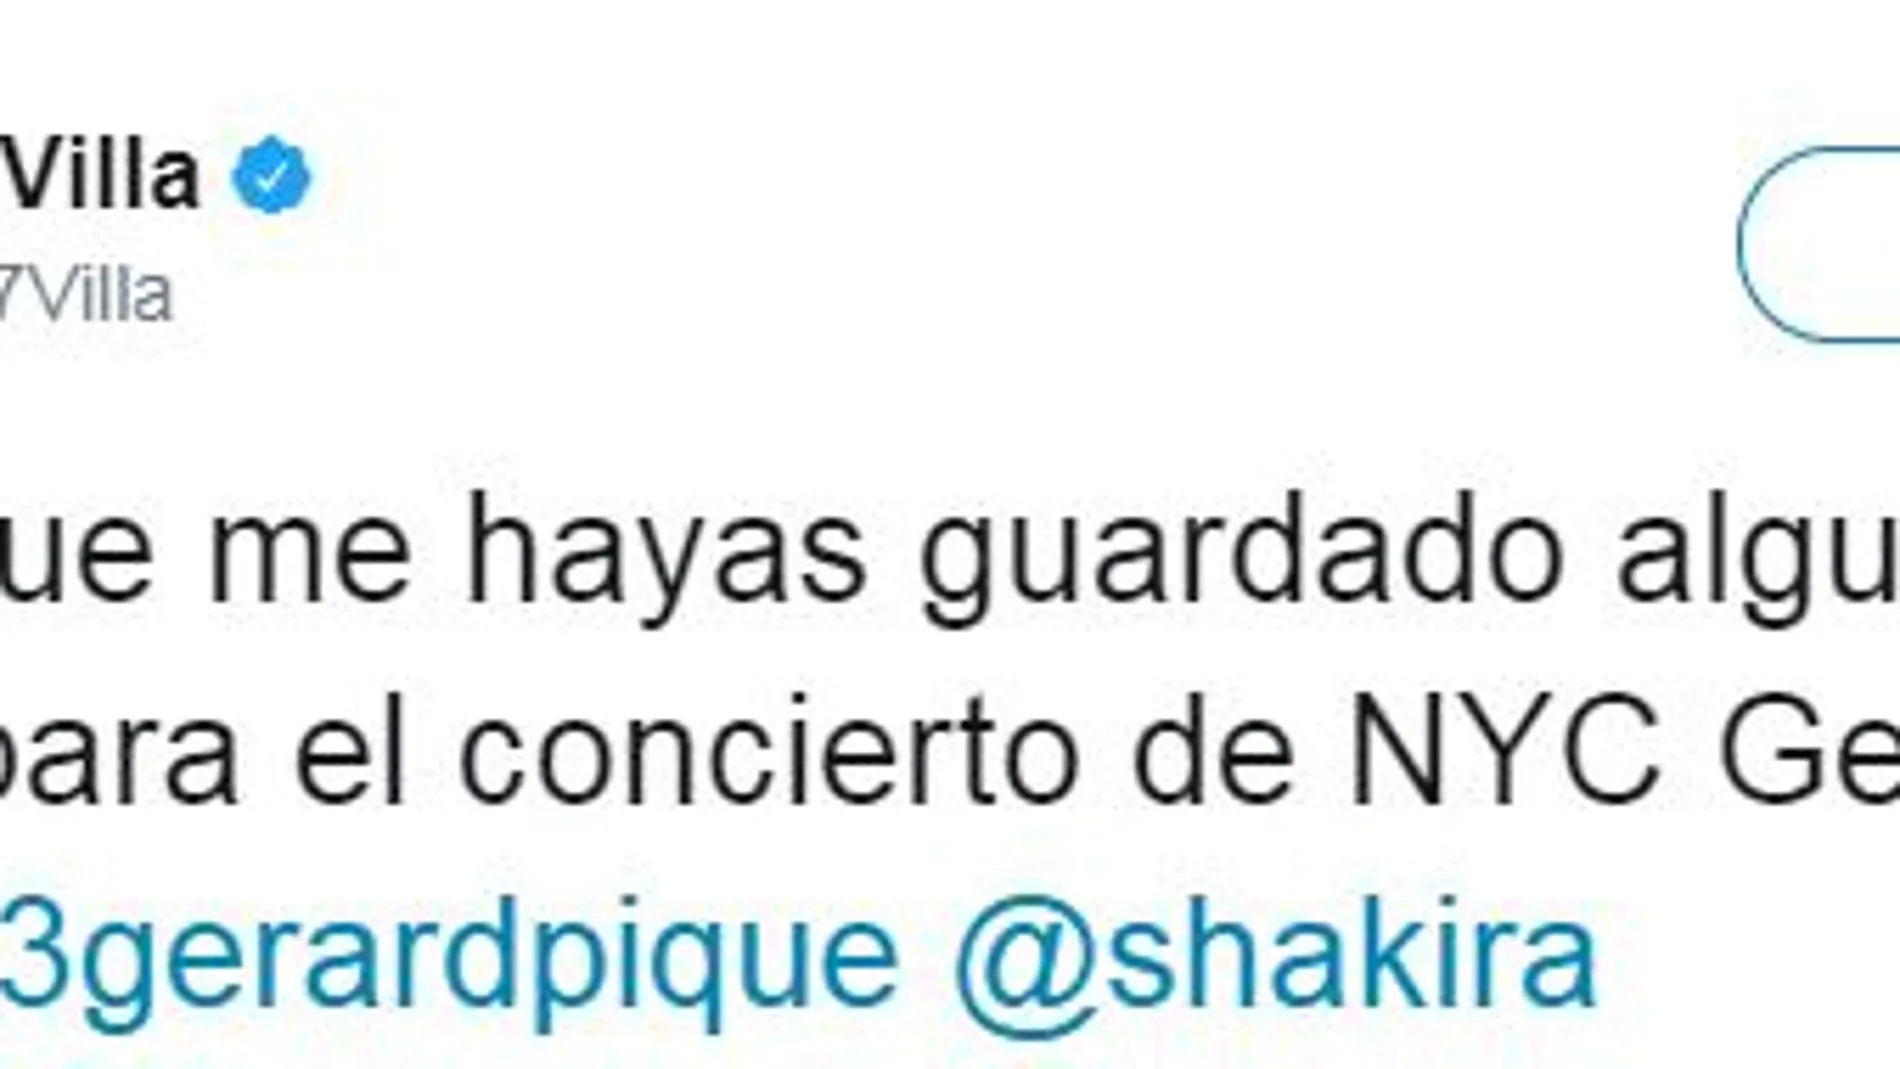 Zasca de Piqué a Casillas por la gira de Shakira: «Deja de pedir entradas gratis y paga»